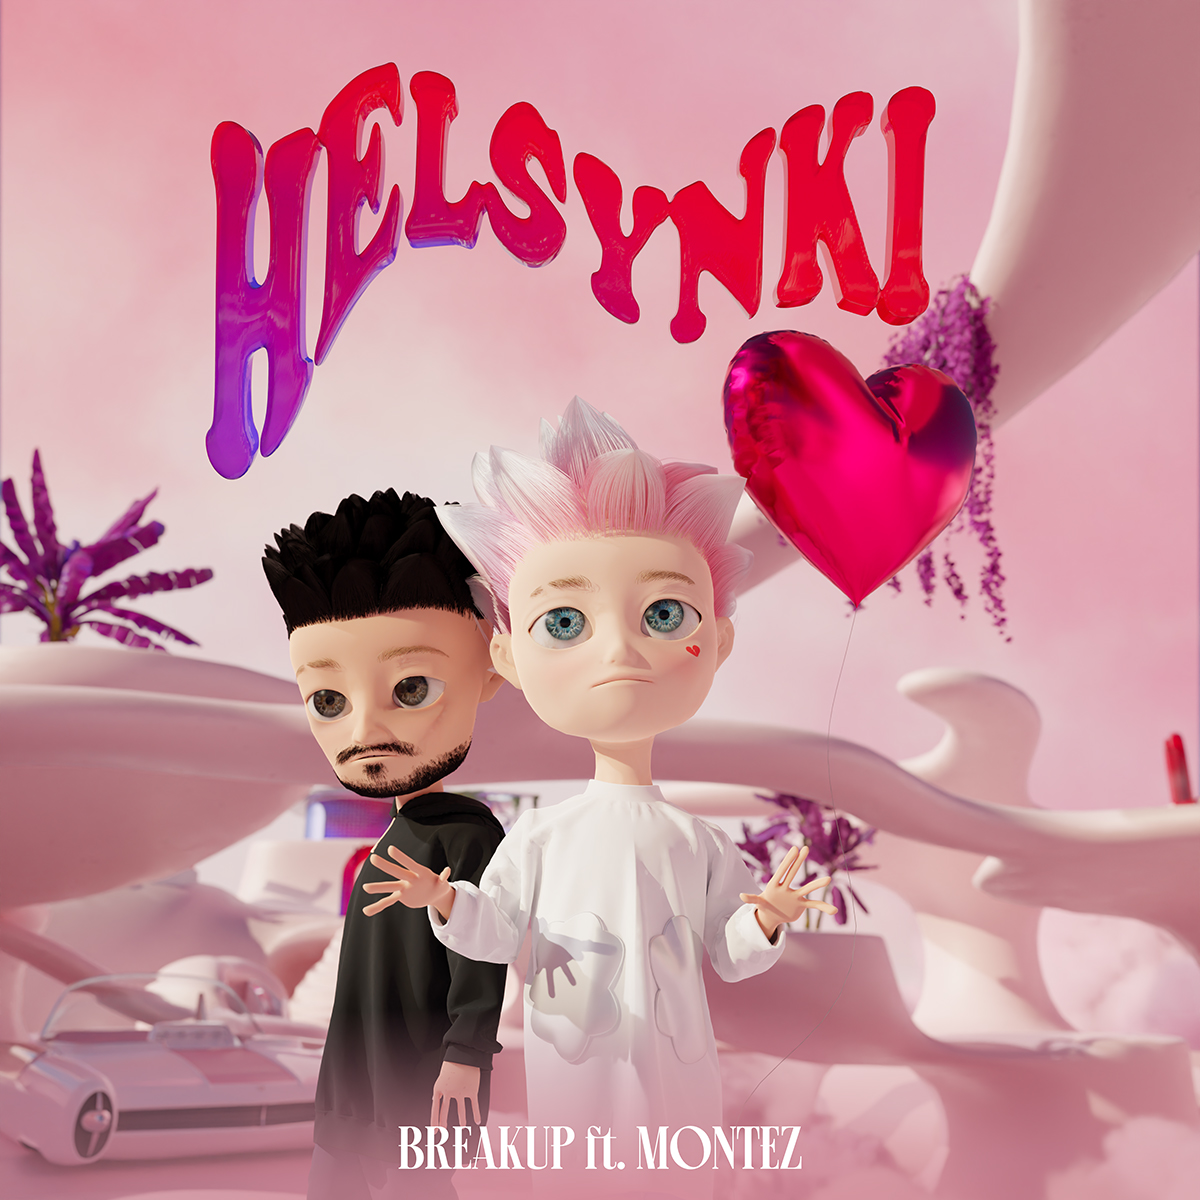 Cover Art 1 Helsynki x Montez – Breakup